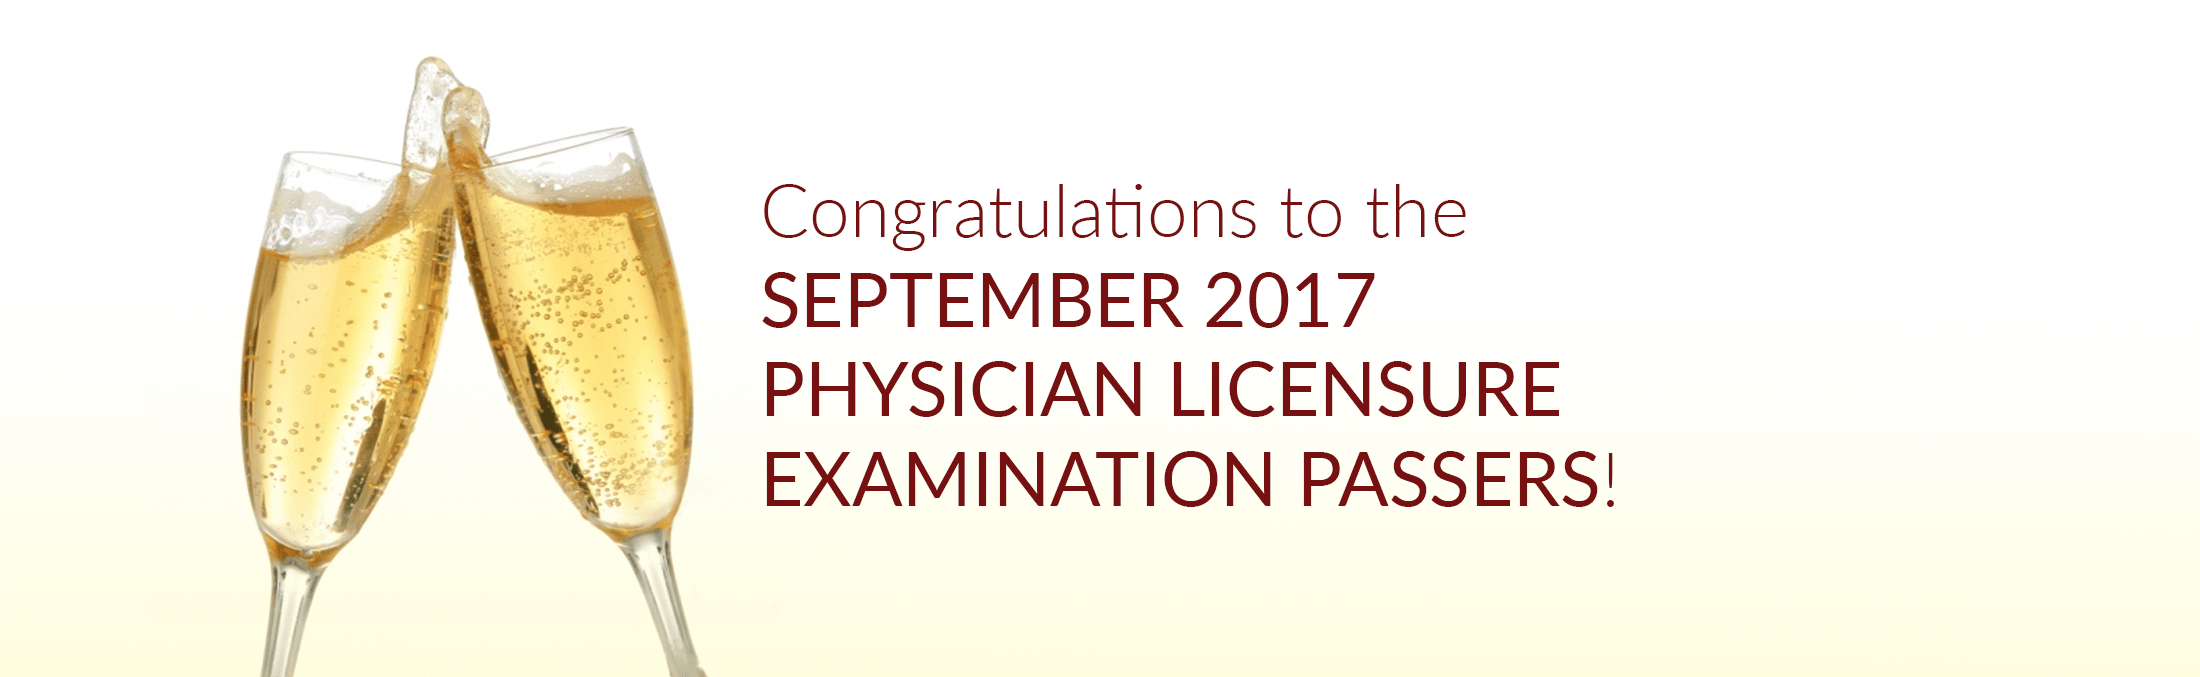 september 2017 physician exam passers